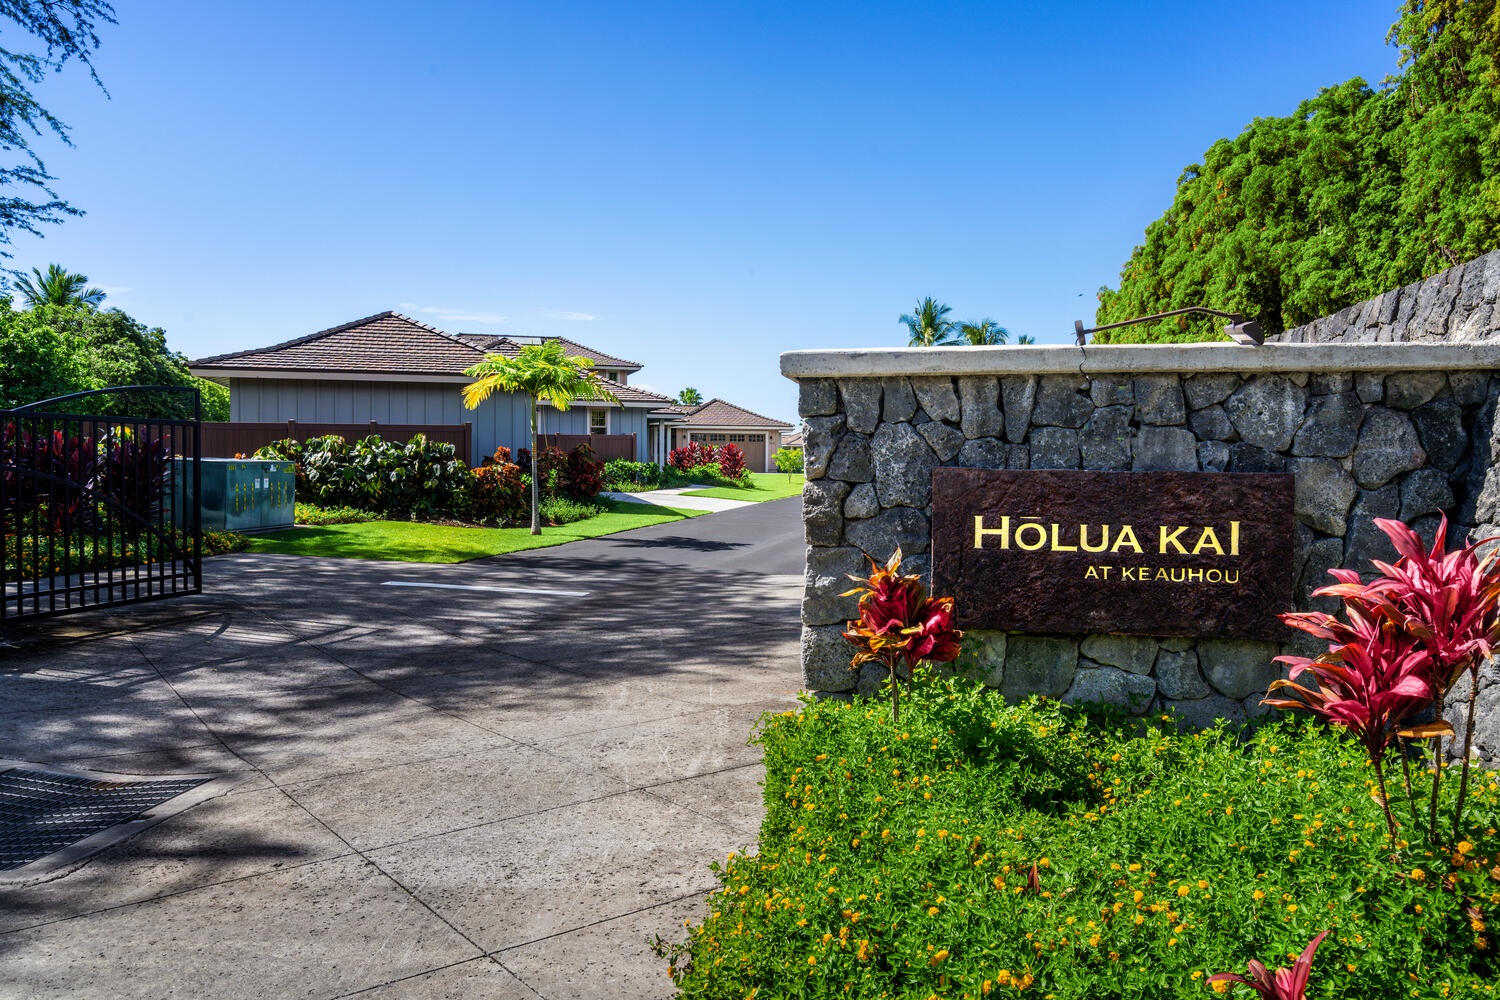 Kailua Kona Vacation Rentals, Holua Kai #32 - Welcome to Holua Kai!